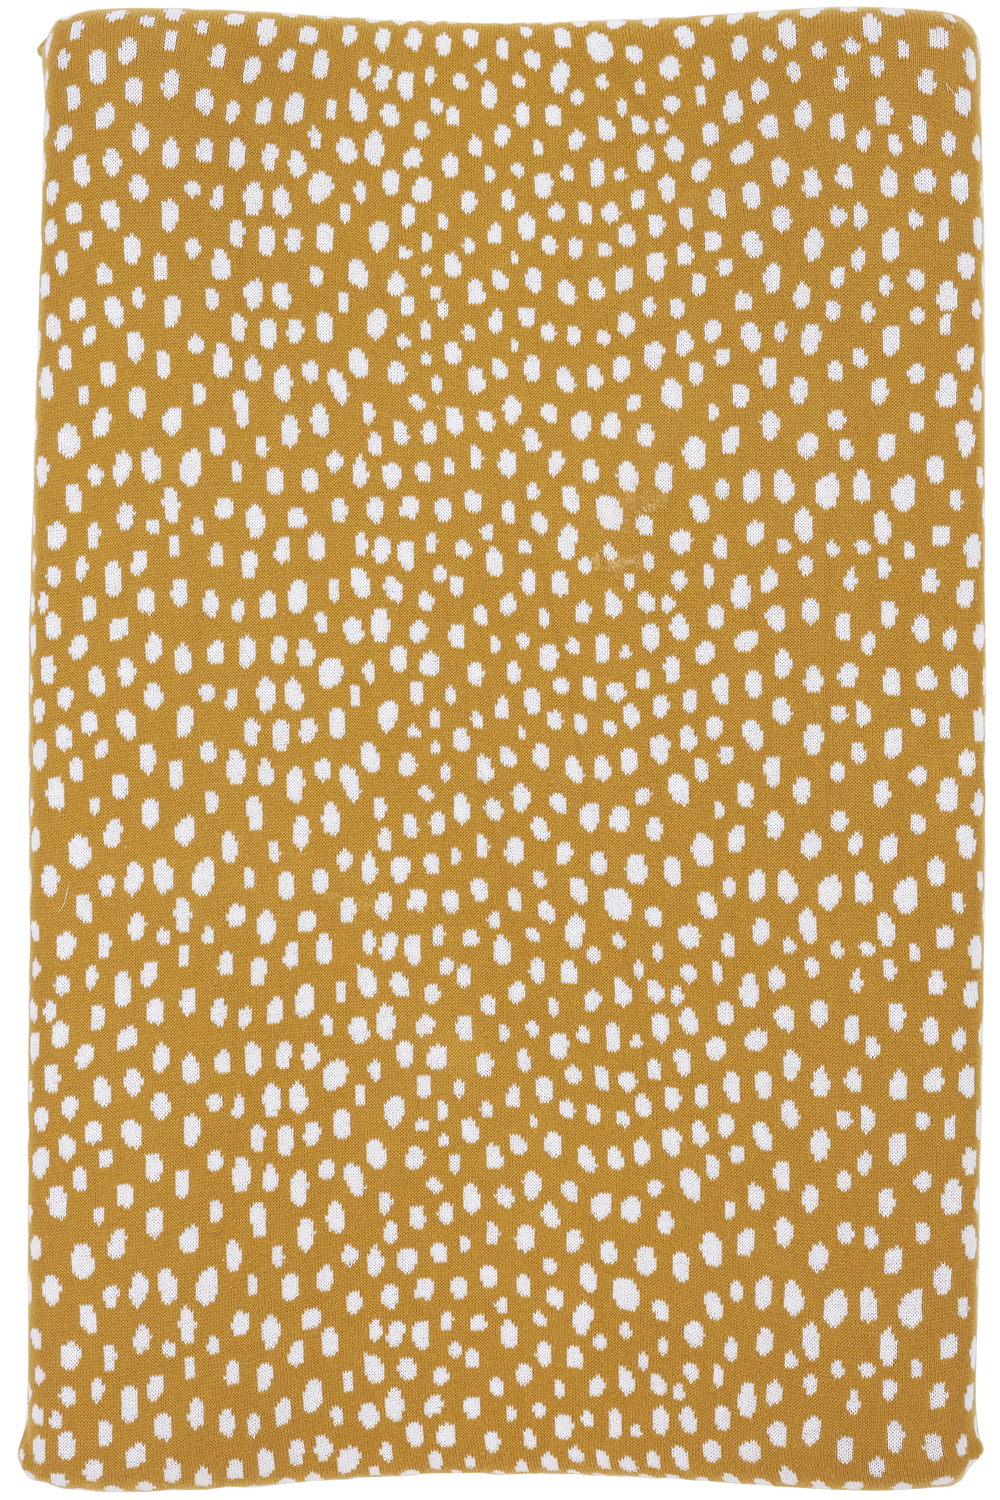 Changing mat cover Cheetah - honey gold - 50x70cm